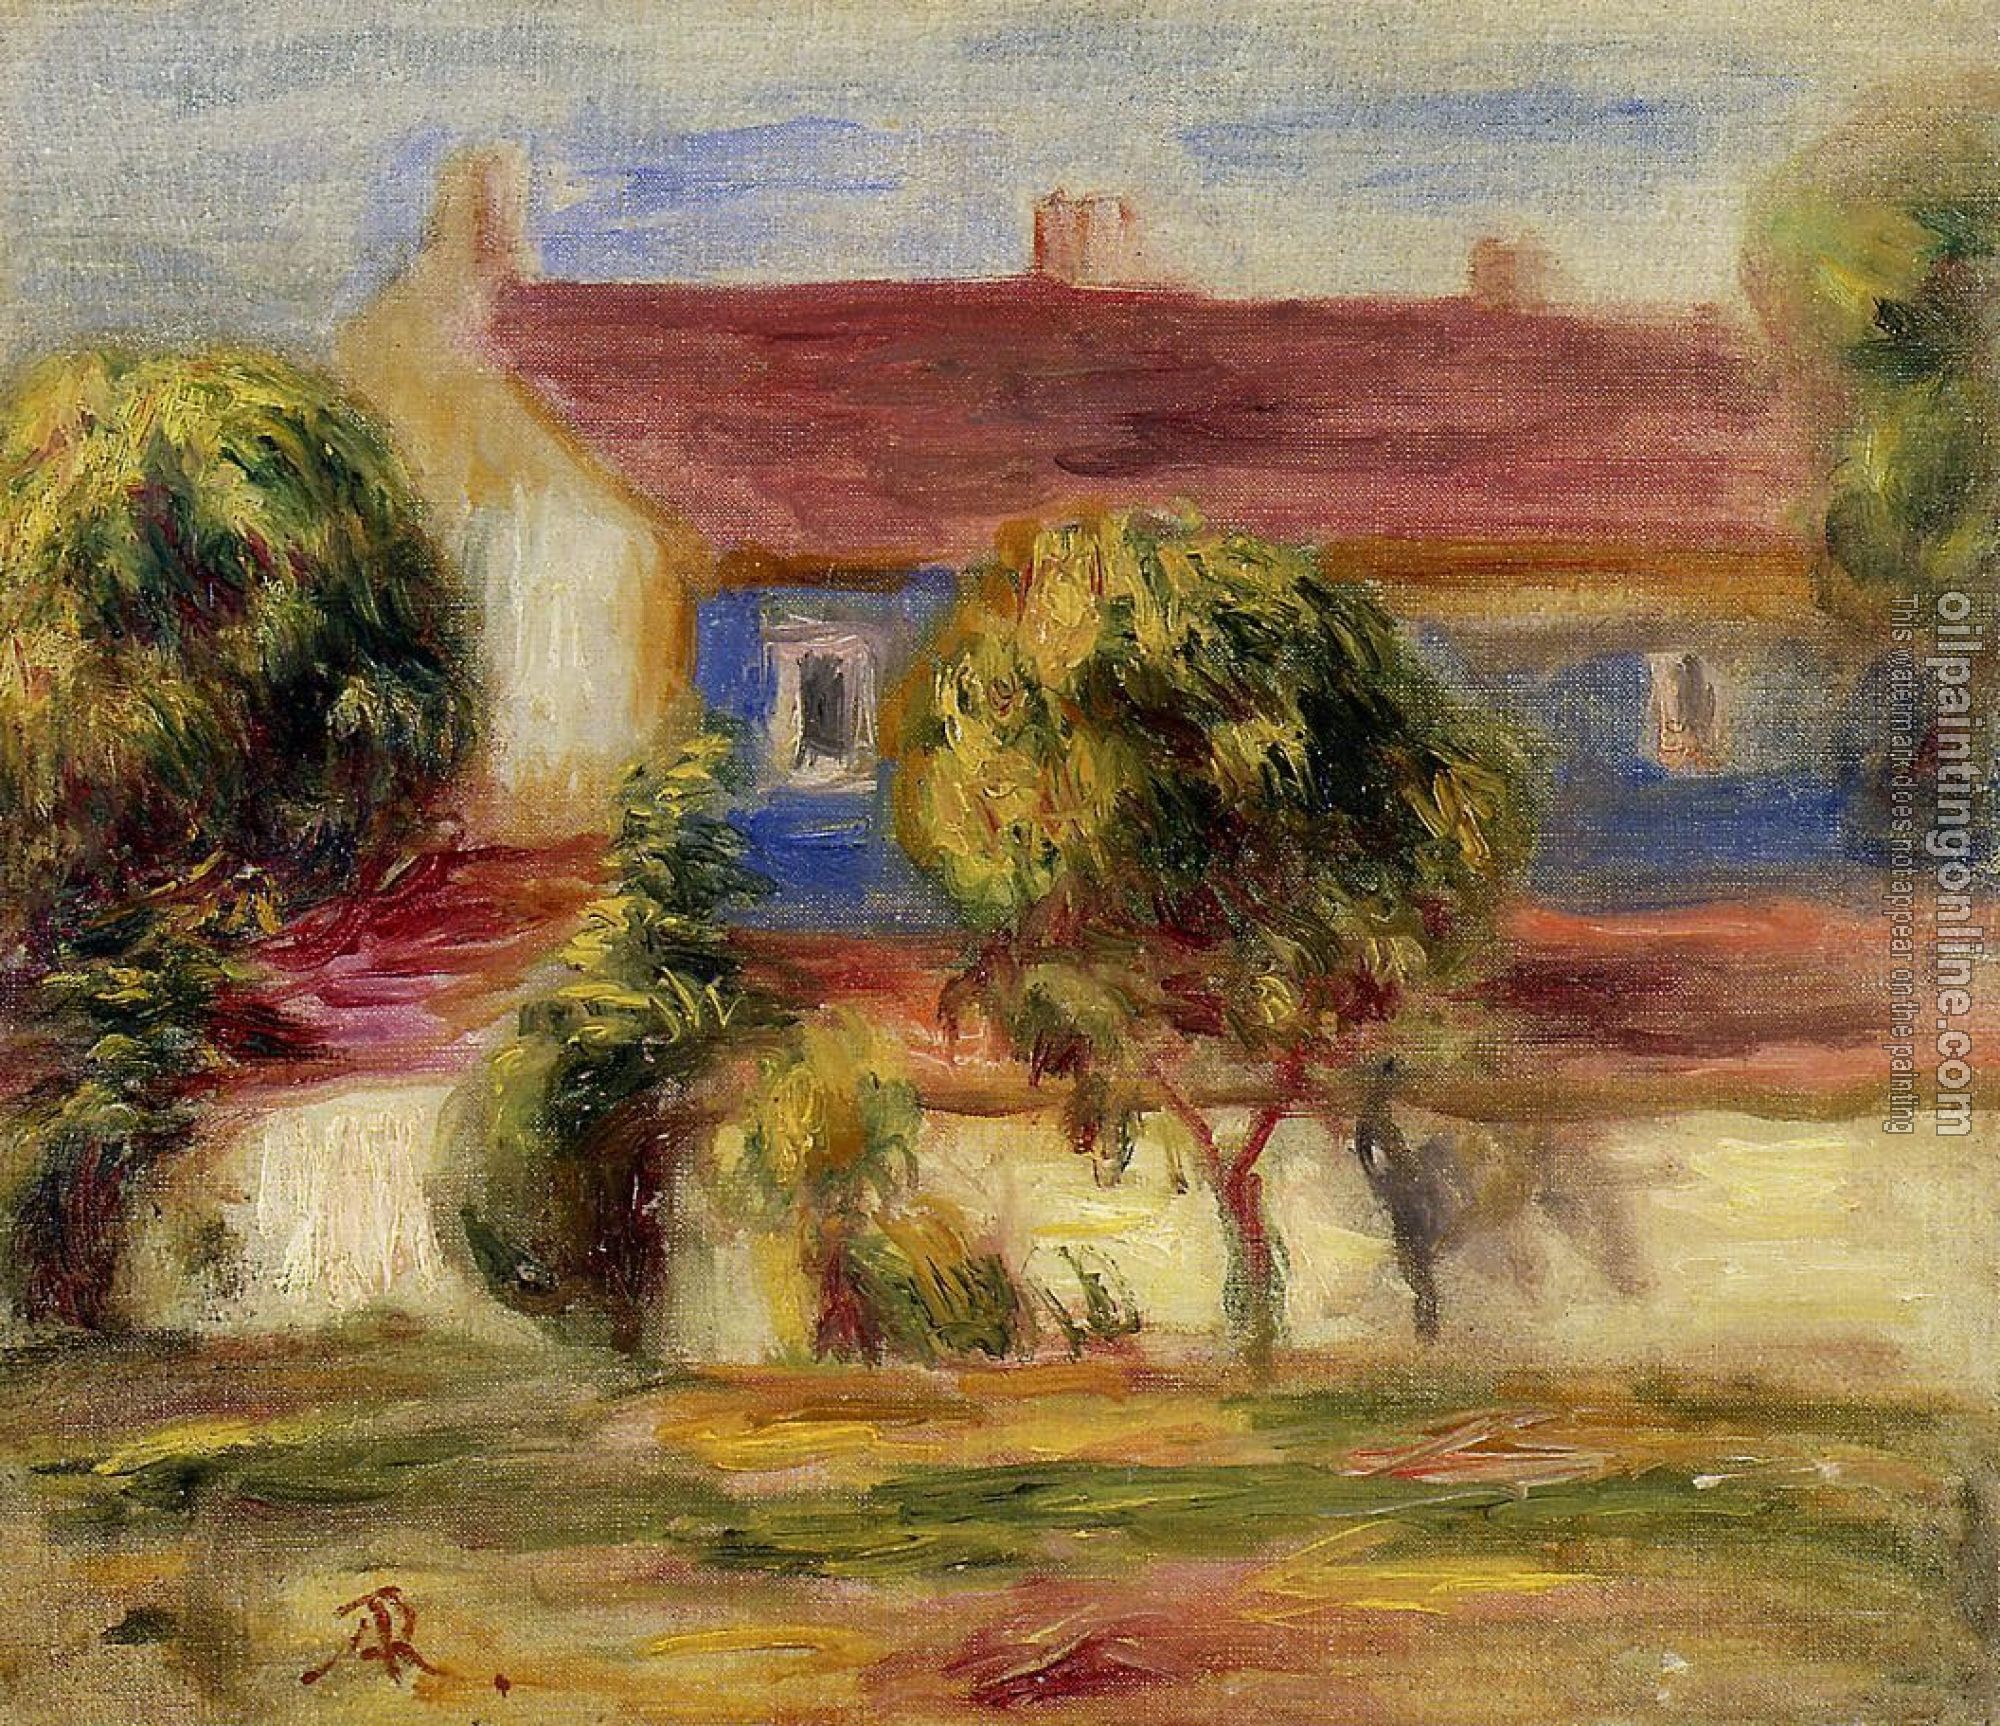 Renoir, Pierre Auguste - The Artist's House